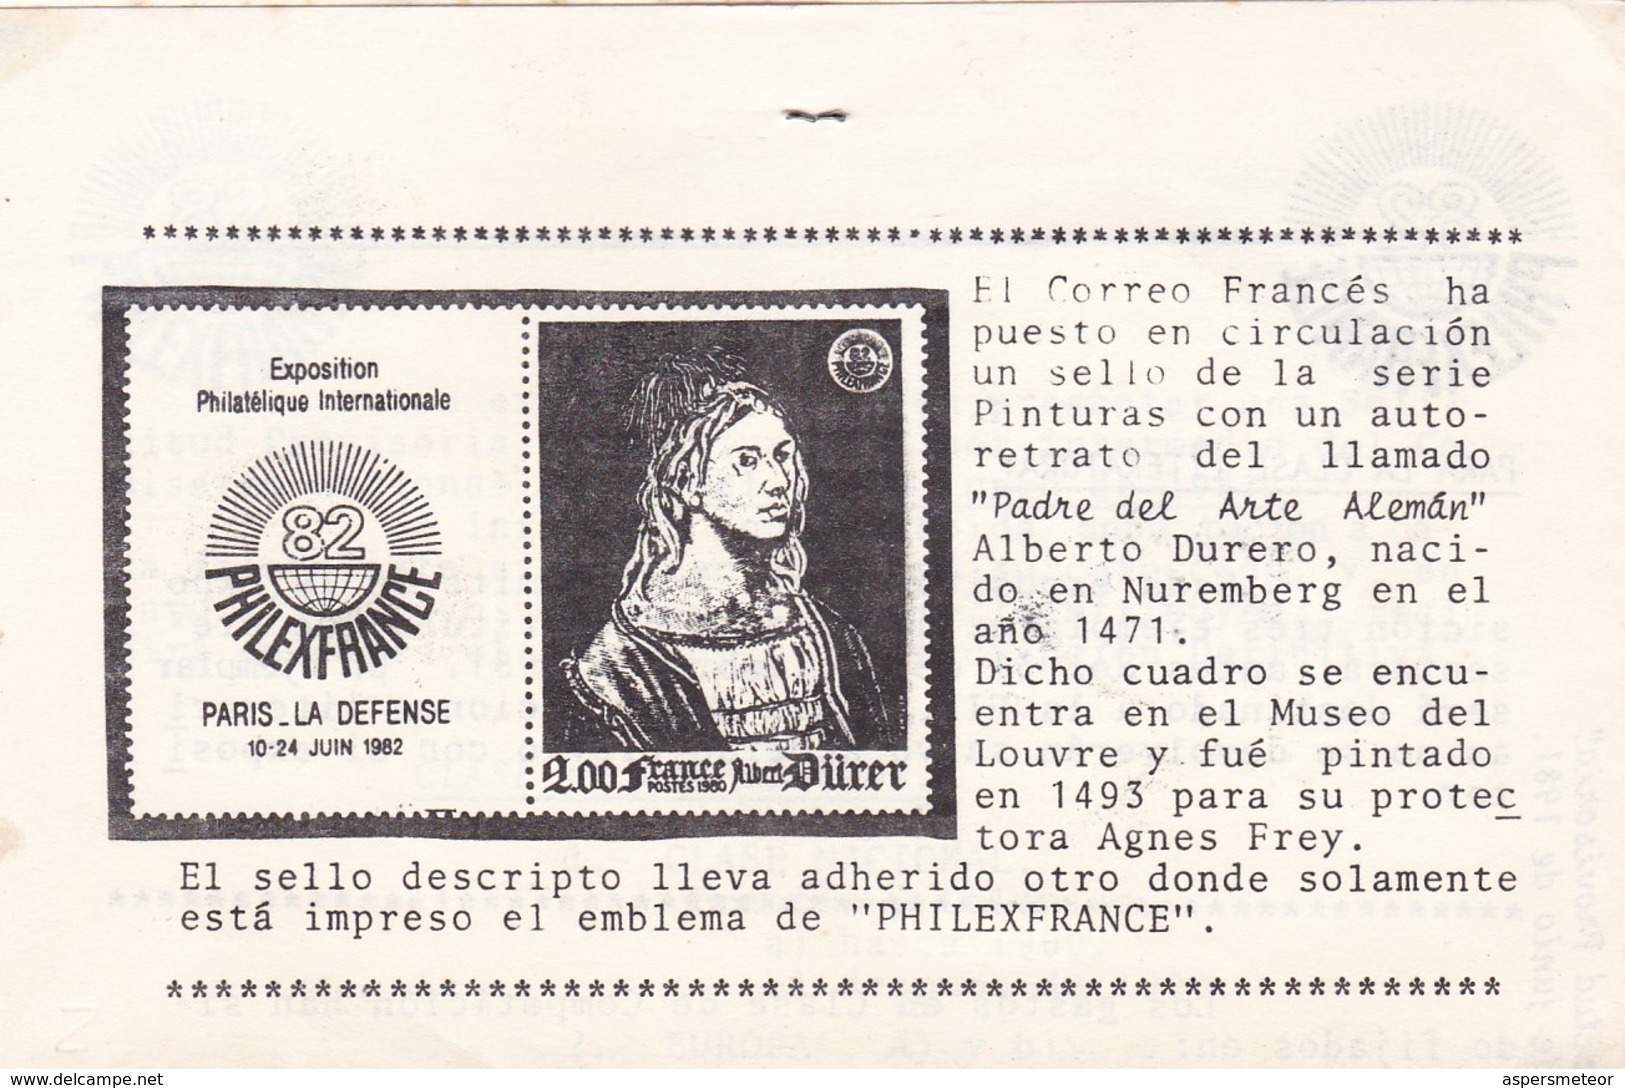 PHILEXFRANCE 82, EXPOSITION PHILATELIQUE INTERNATIONALE, 1982 PARIS. ARGENTINA CIRCULATED SPC -LILHU - Filatelistische Tentoonstellingen